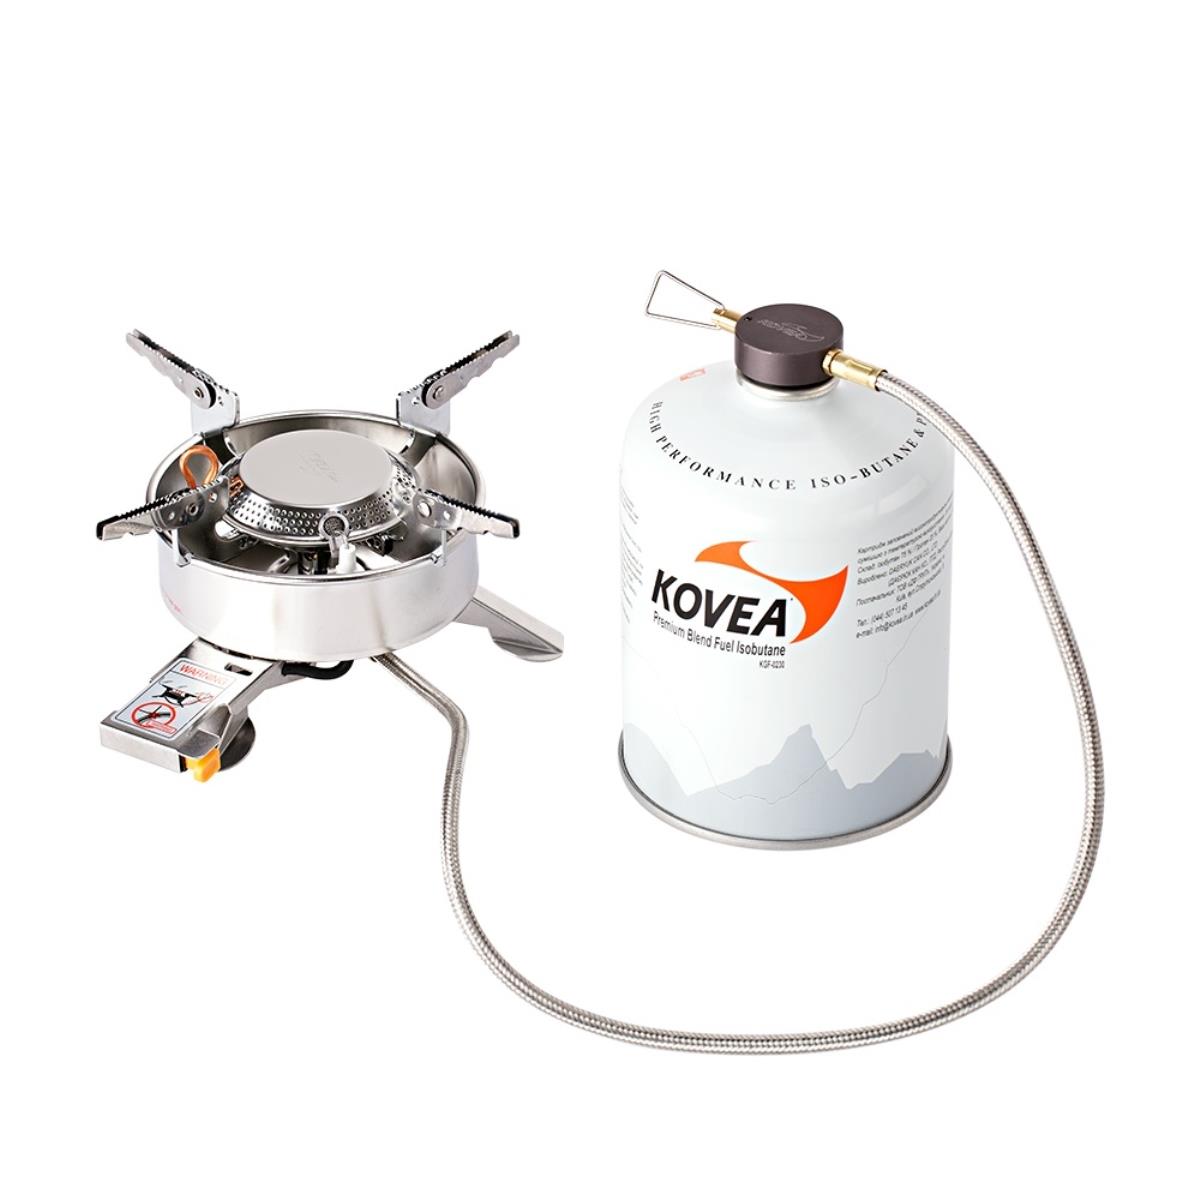 Горелка газовая со шлангом (TKB-9703-1L) Kovea удачный биопрепарат для туалетов башинком